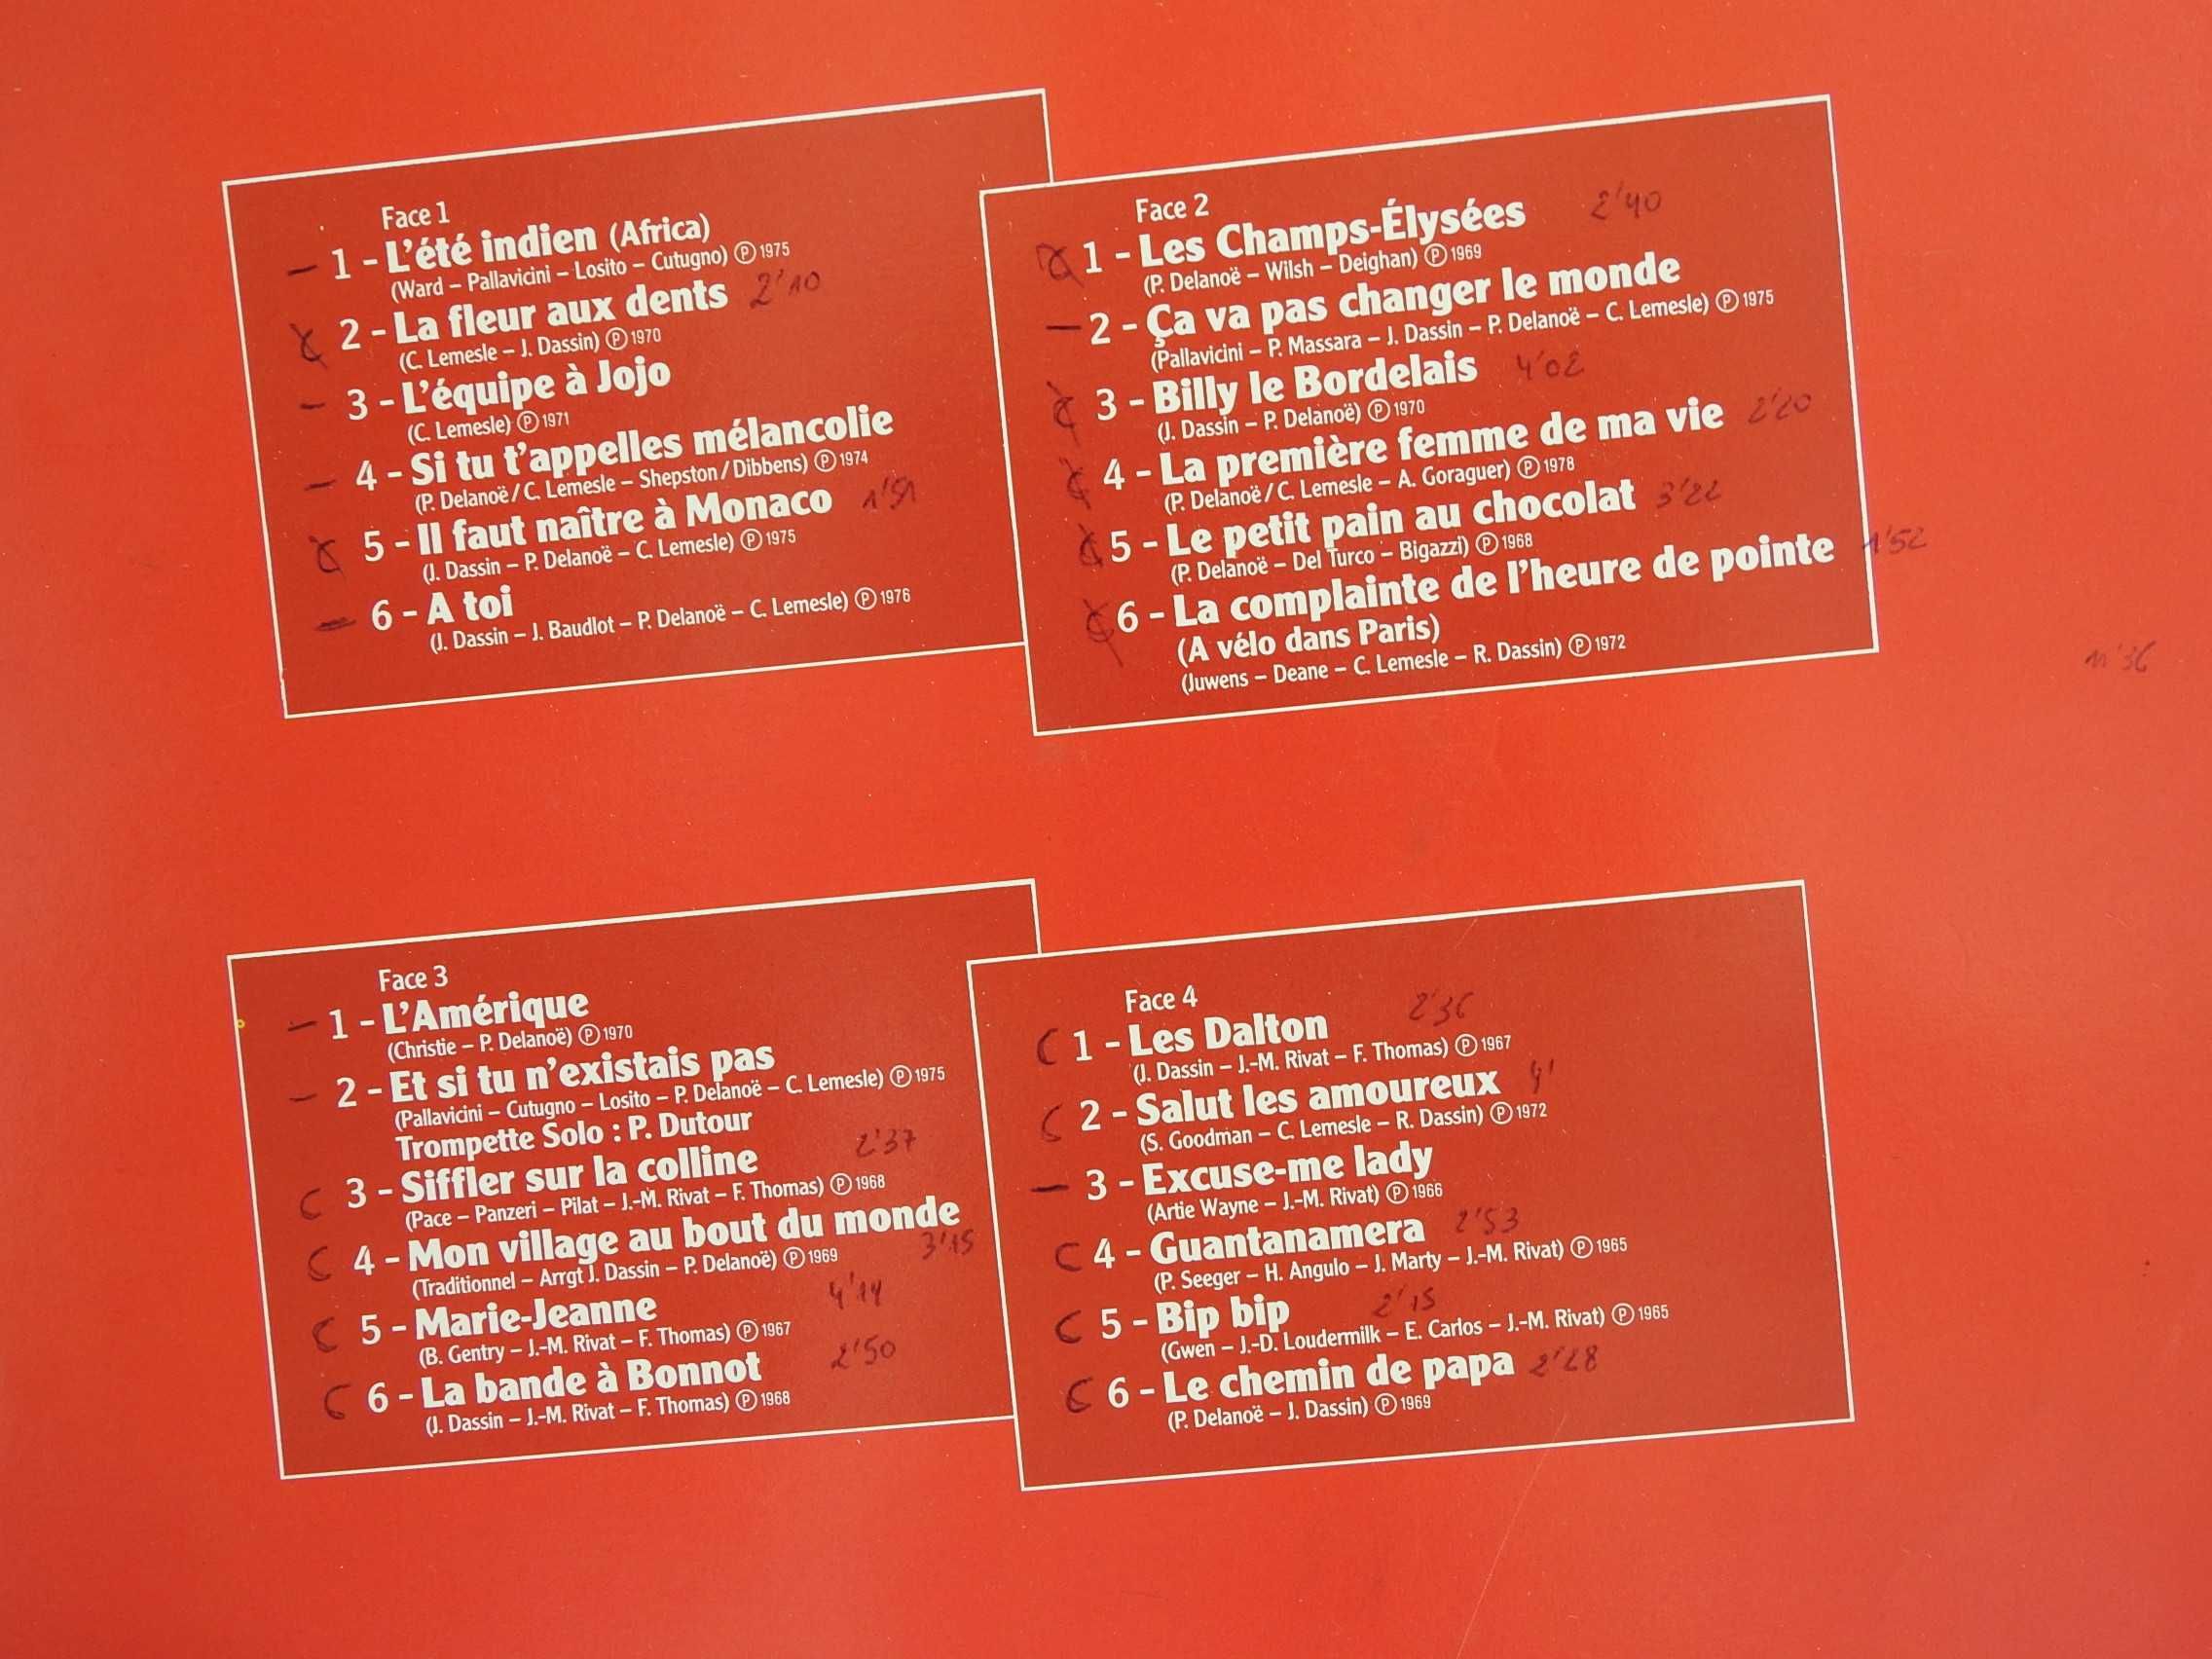 Joe Dassin Album Souvenir LP 2 пластинки Франция 1986 NM 1 press